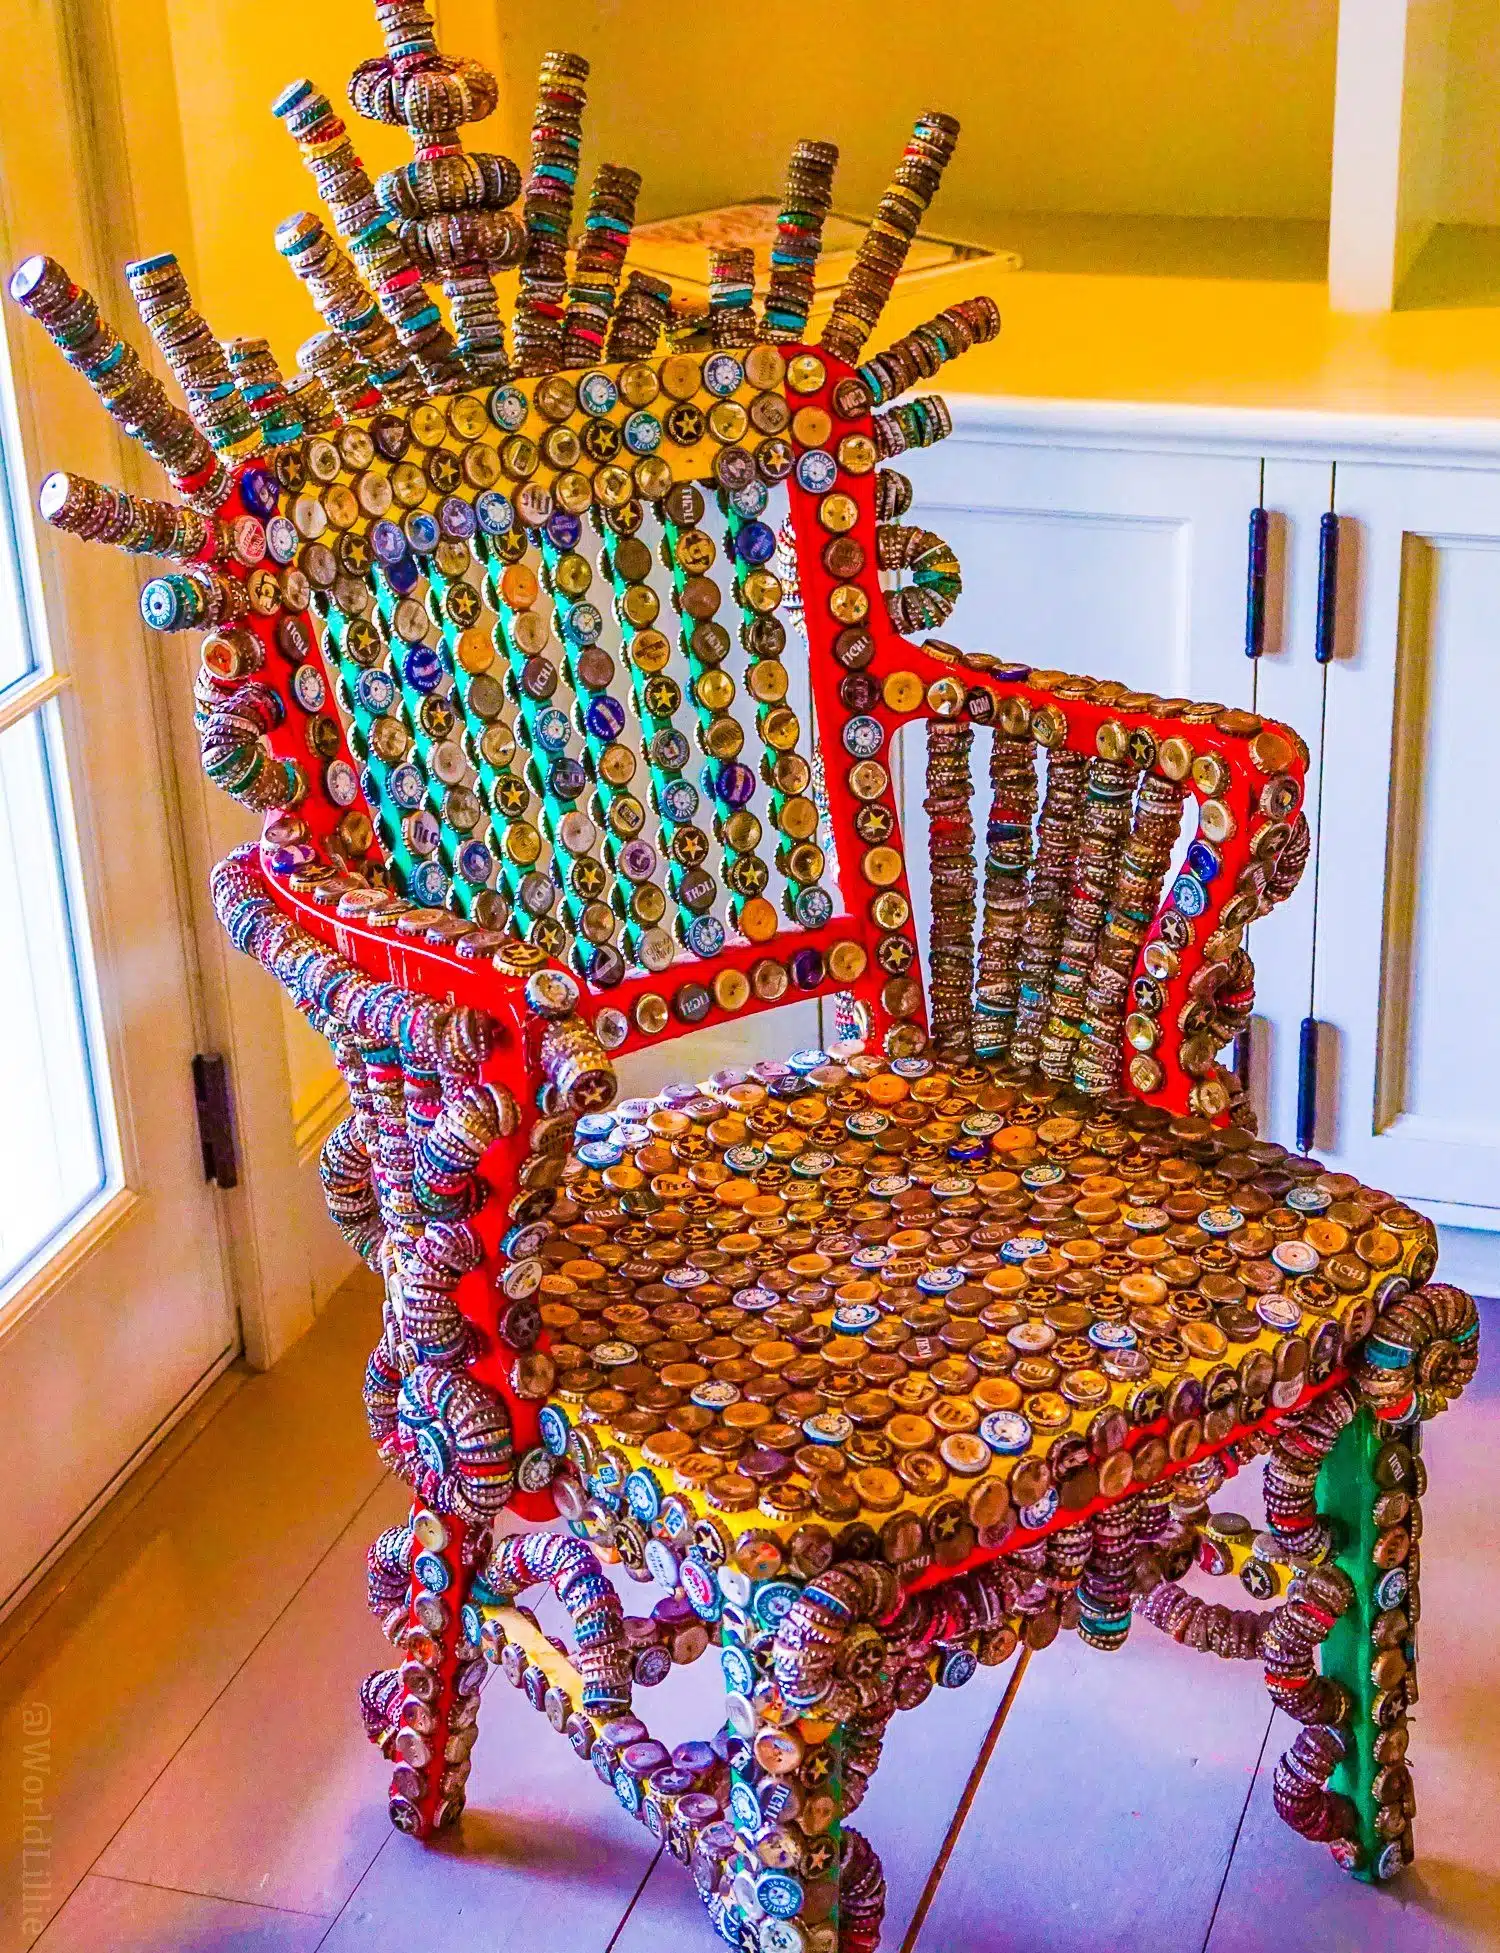 Bottle cap art: Modern art chair from recycled materials at the Red Lion Inn.